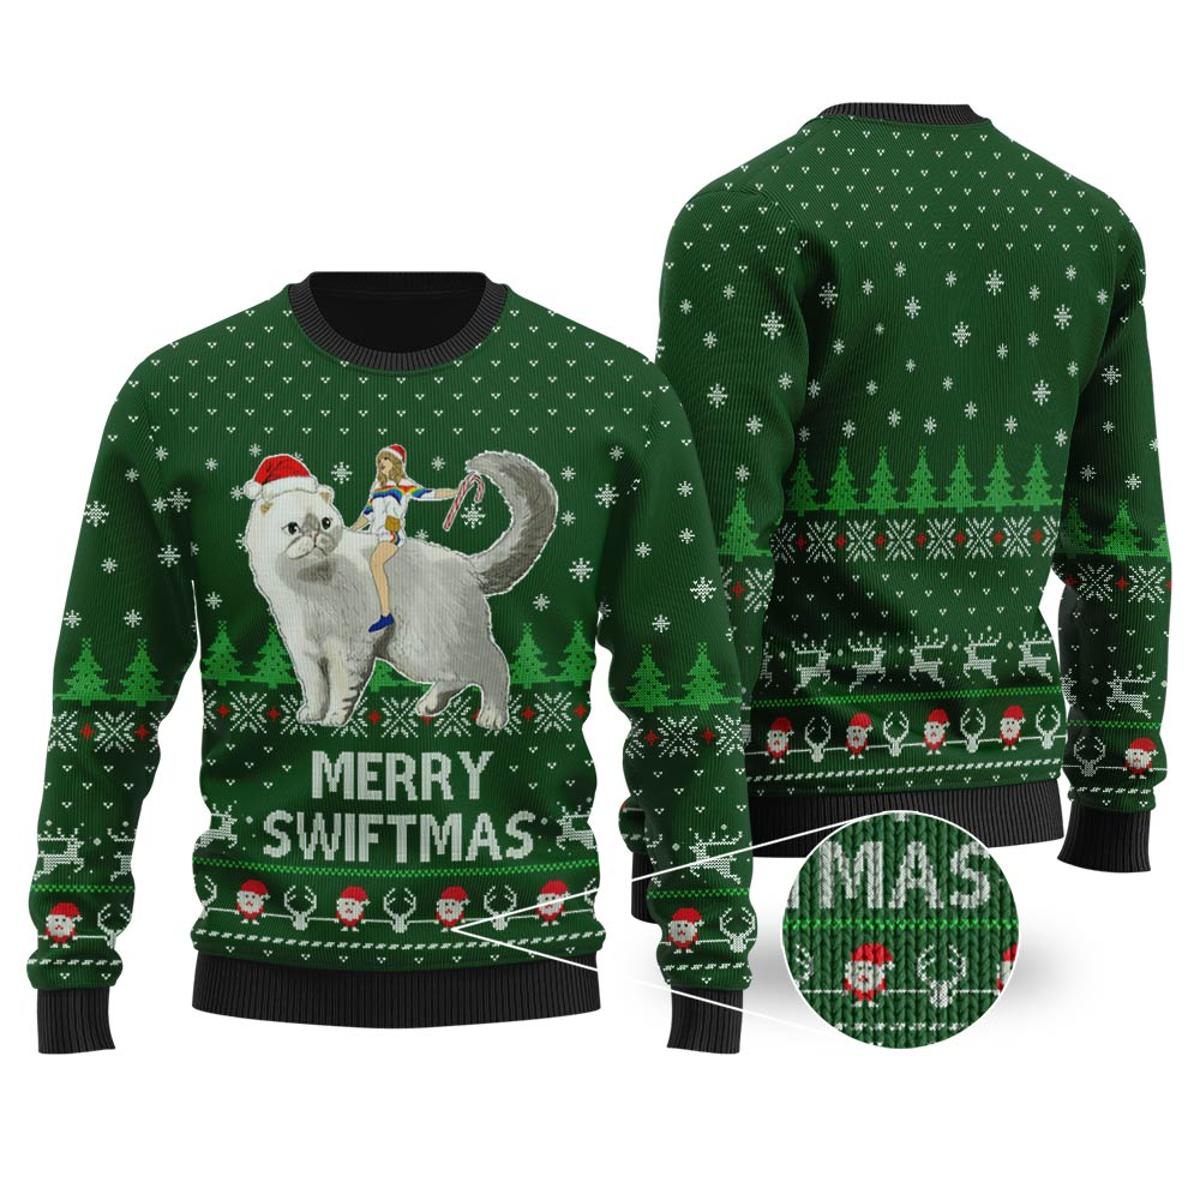 Merry Swiftmas Taylor Swift Ugliest Sweaters For Christmass